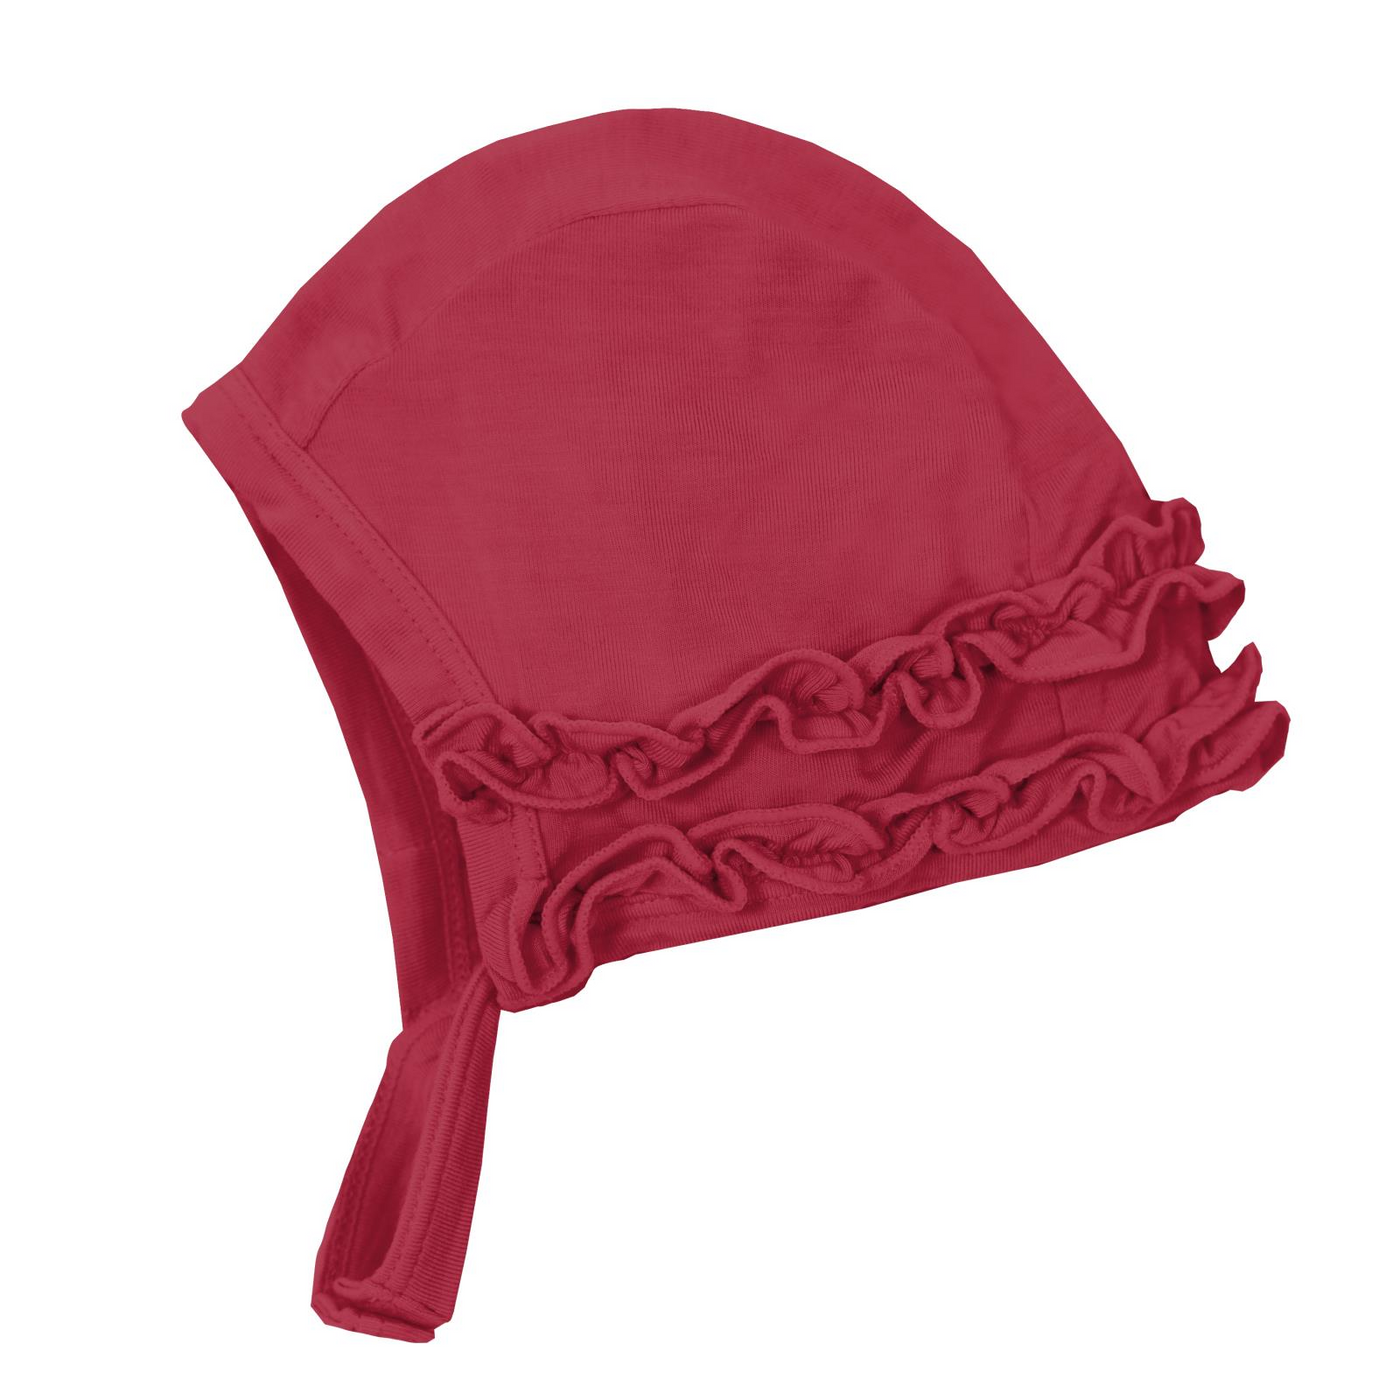 Ruffle Bonnet in Crimson